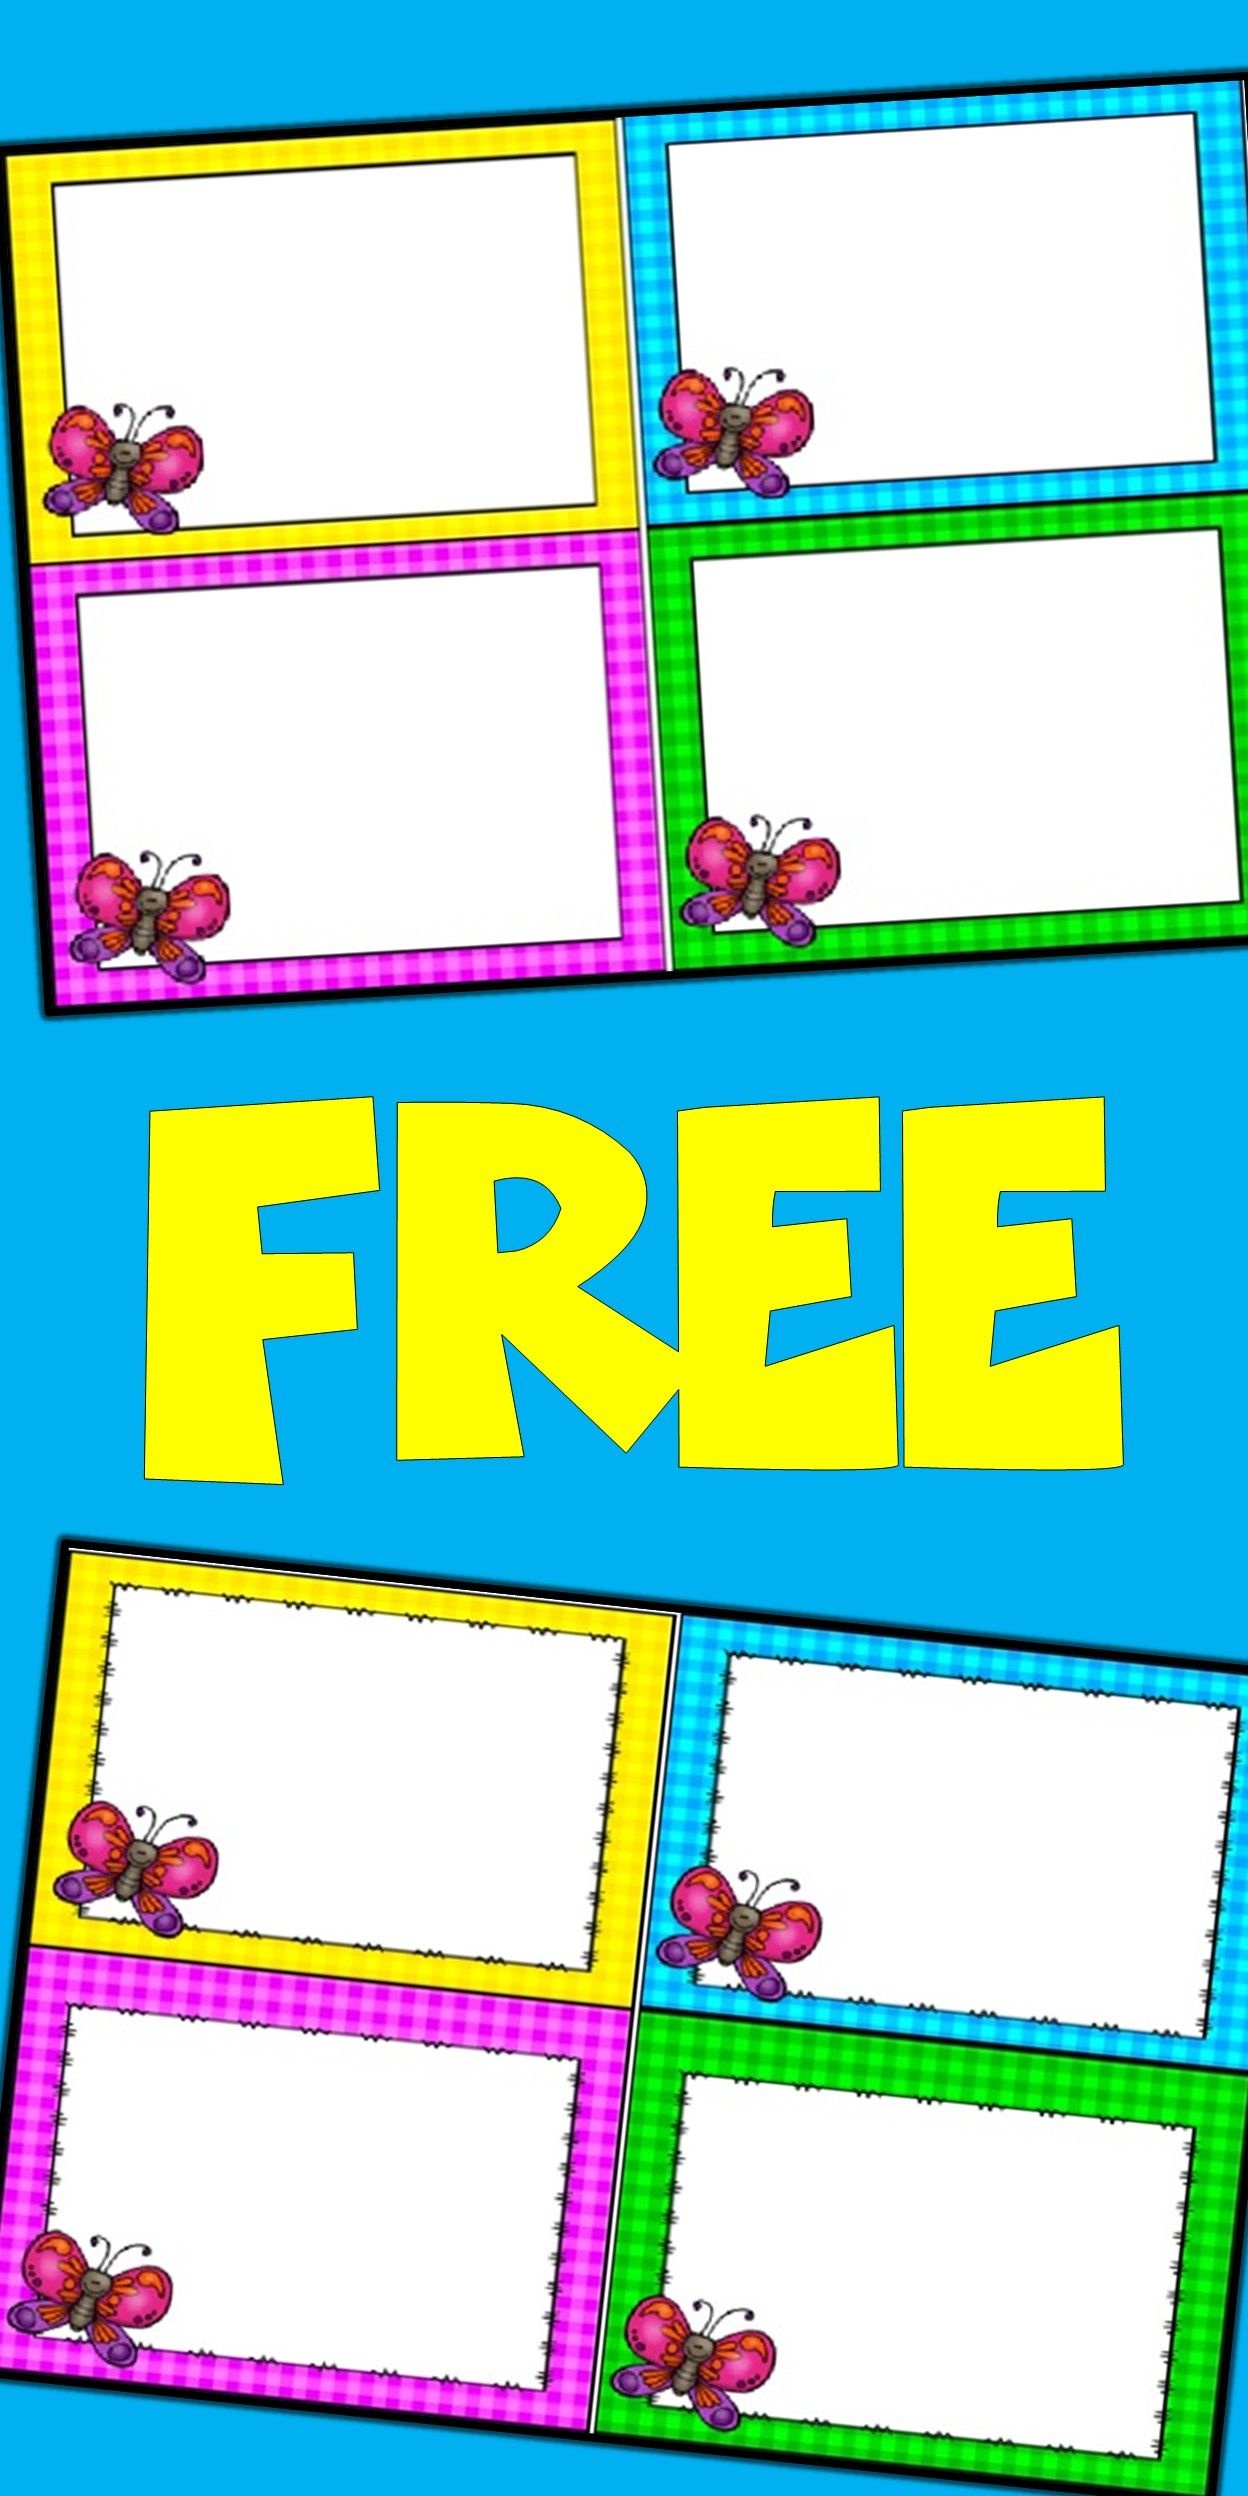 free-printable-blank-task-cards-free-printable